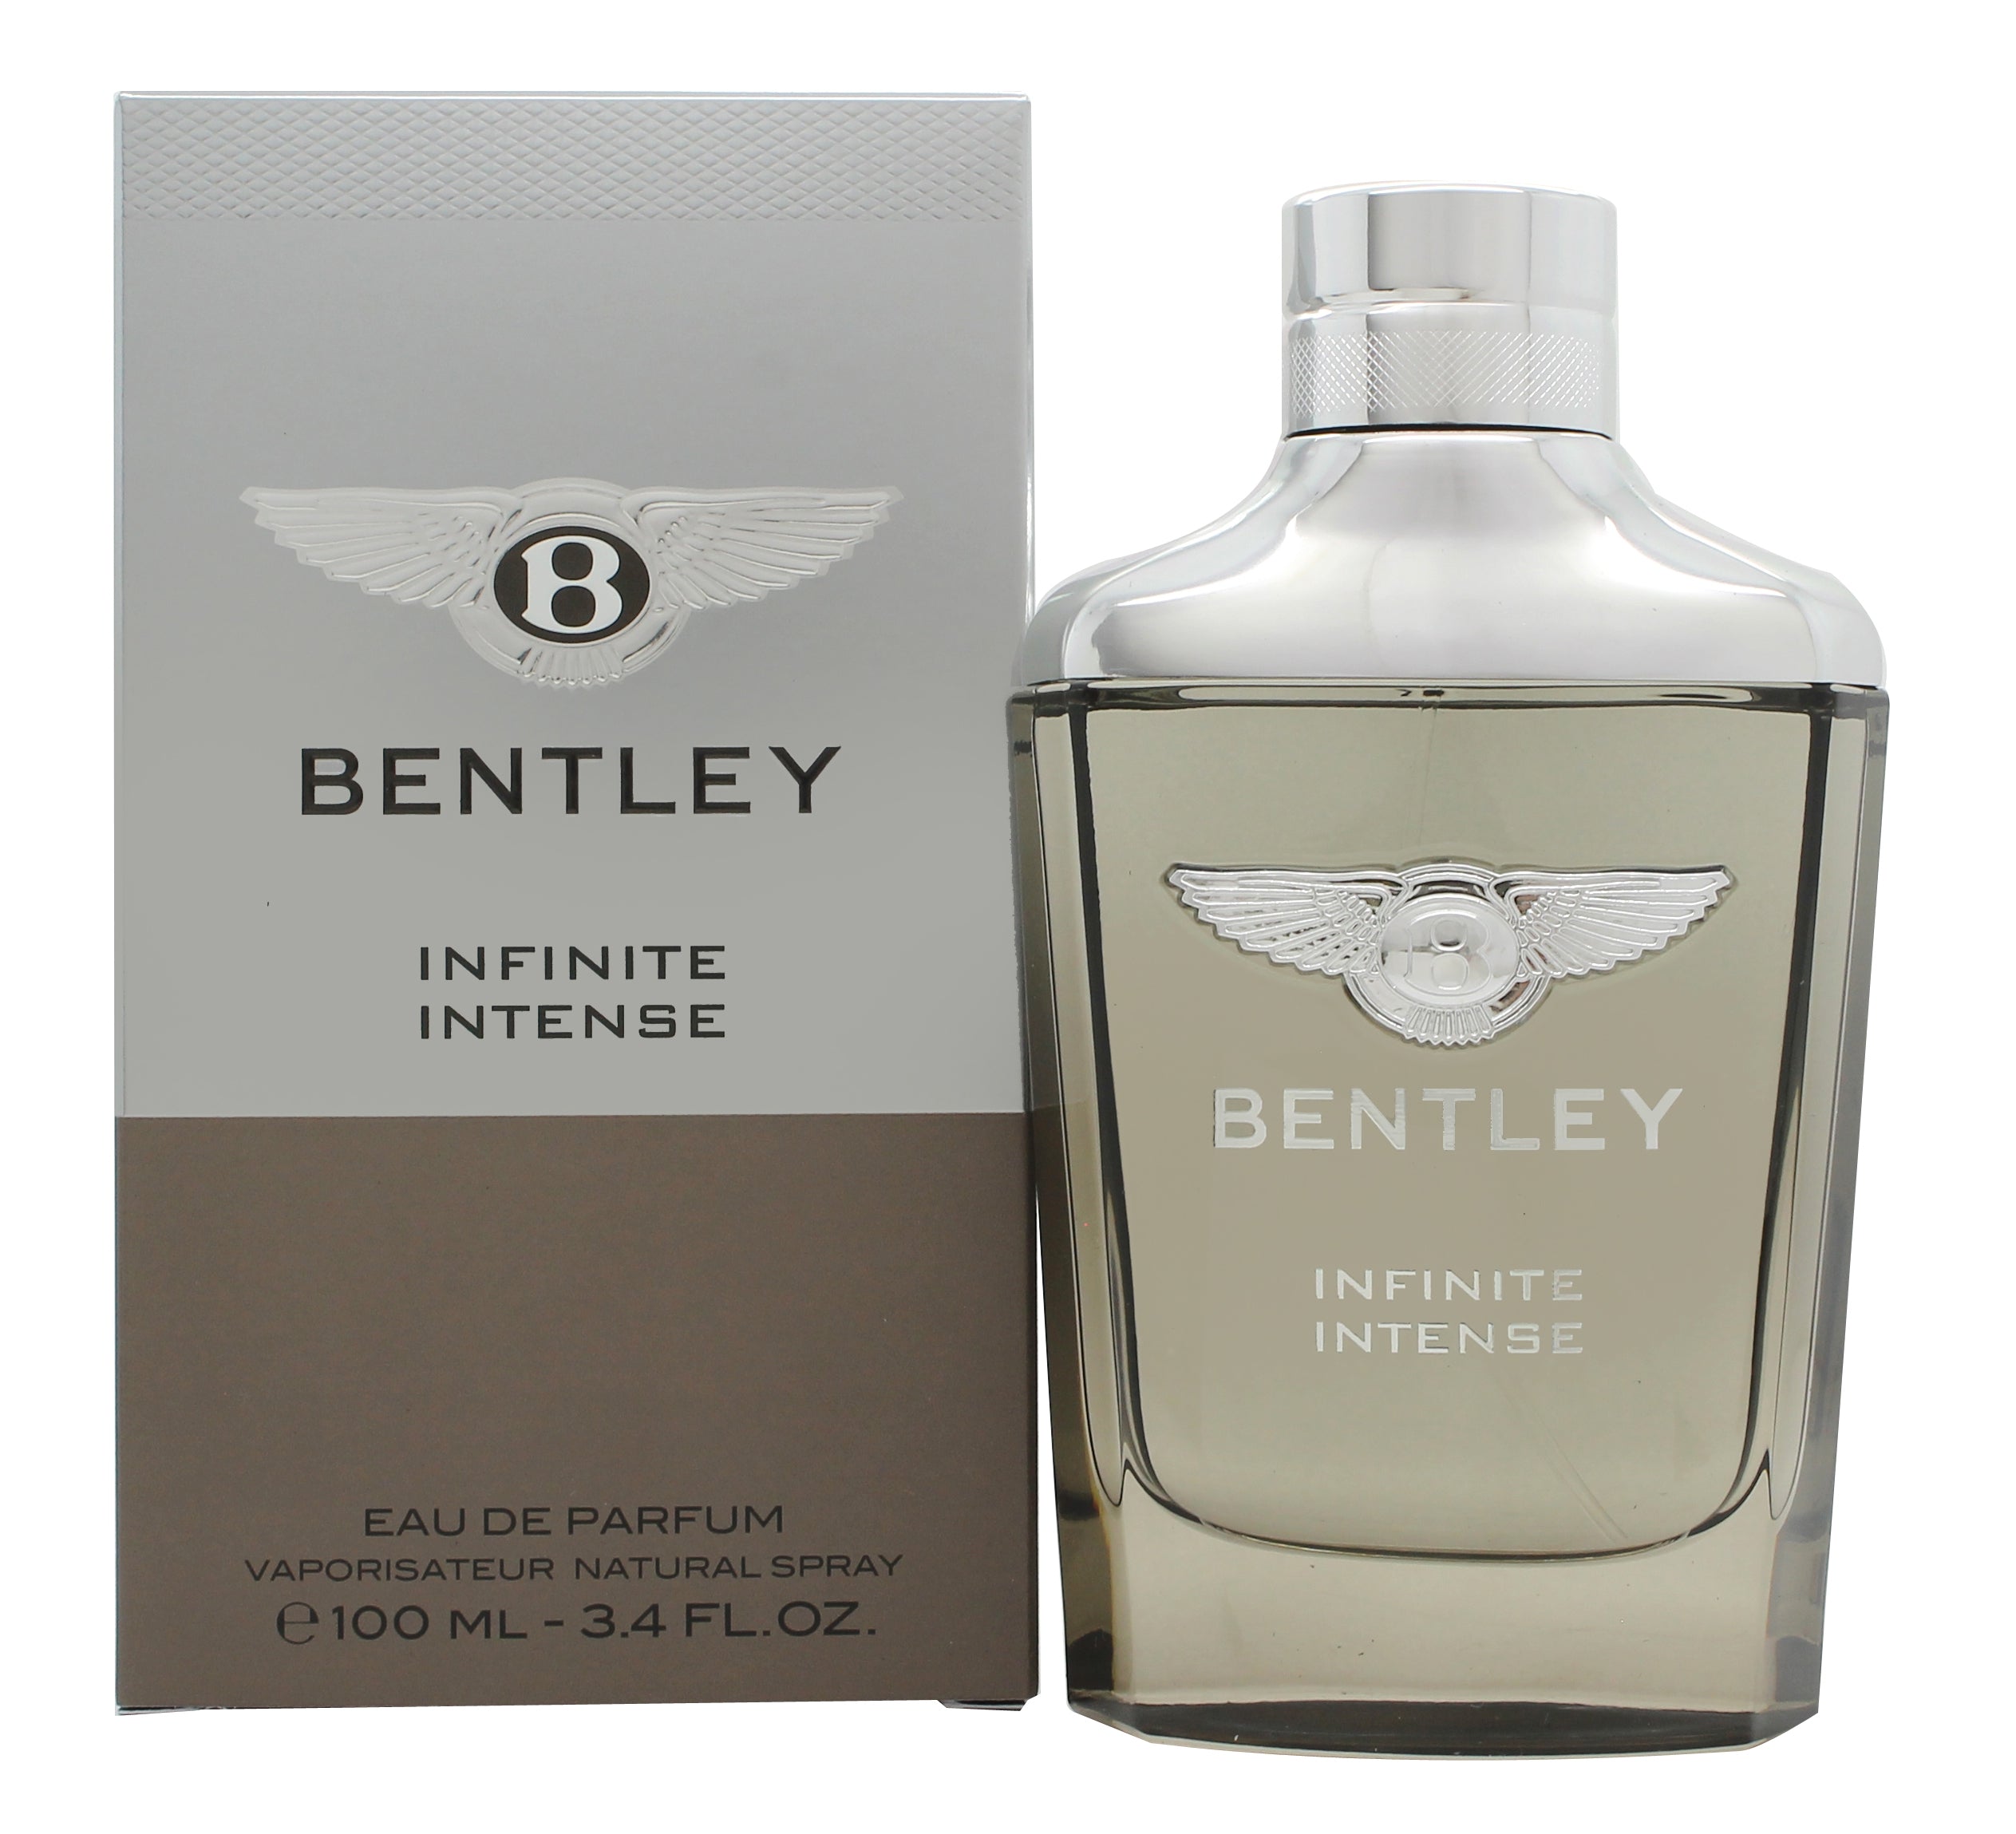 View Bentley Infinite Intense Eau de Parfum 100ml Spray information